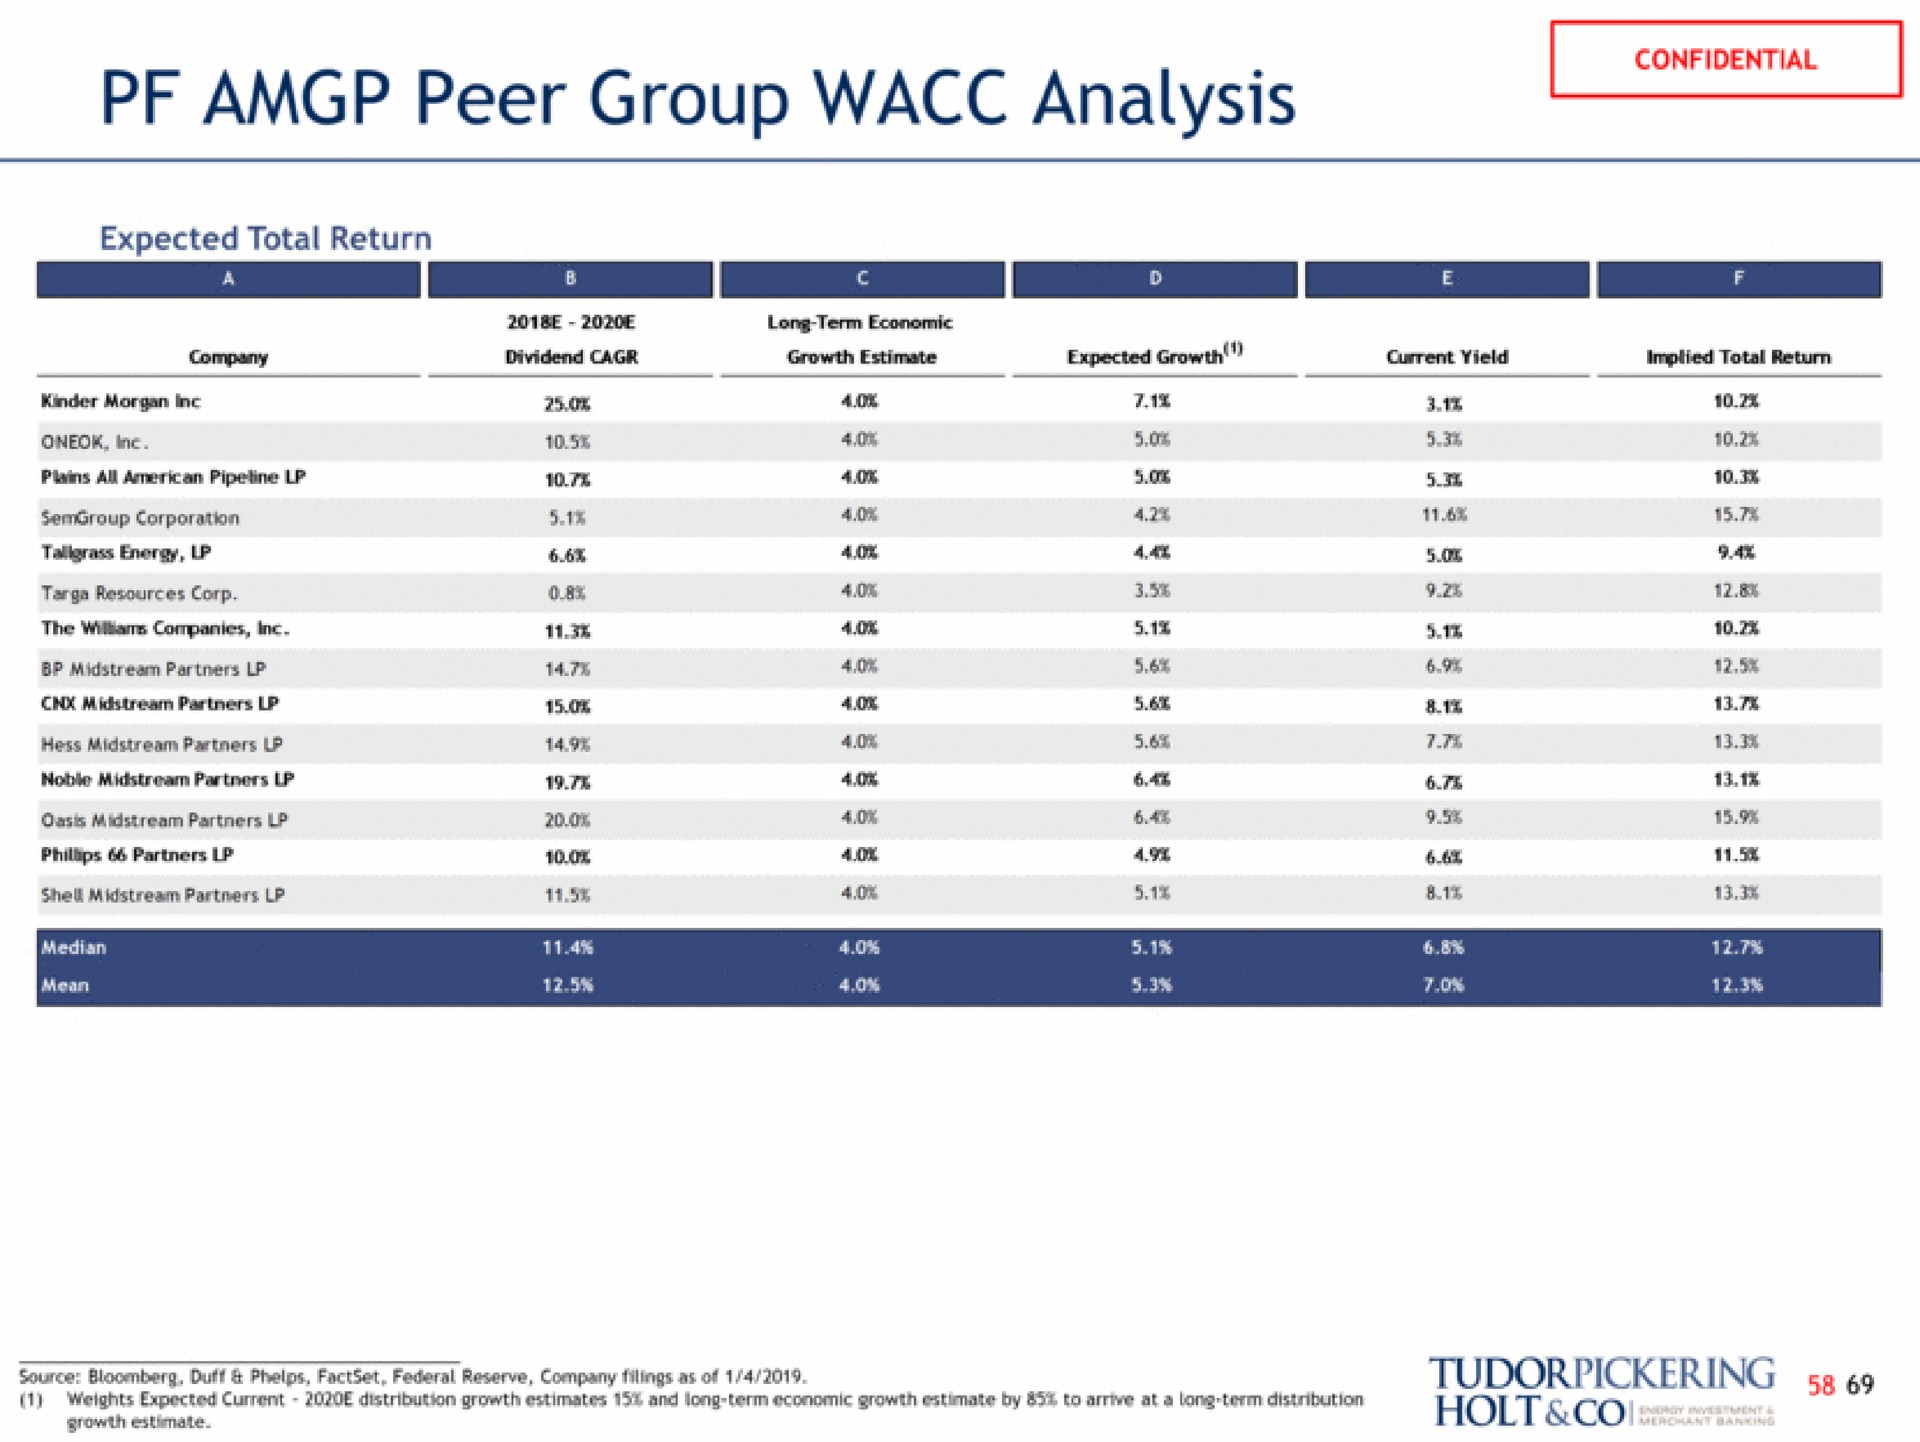 peer group analysis | Tudor, Pickering, Holt & Co